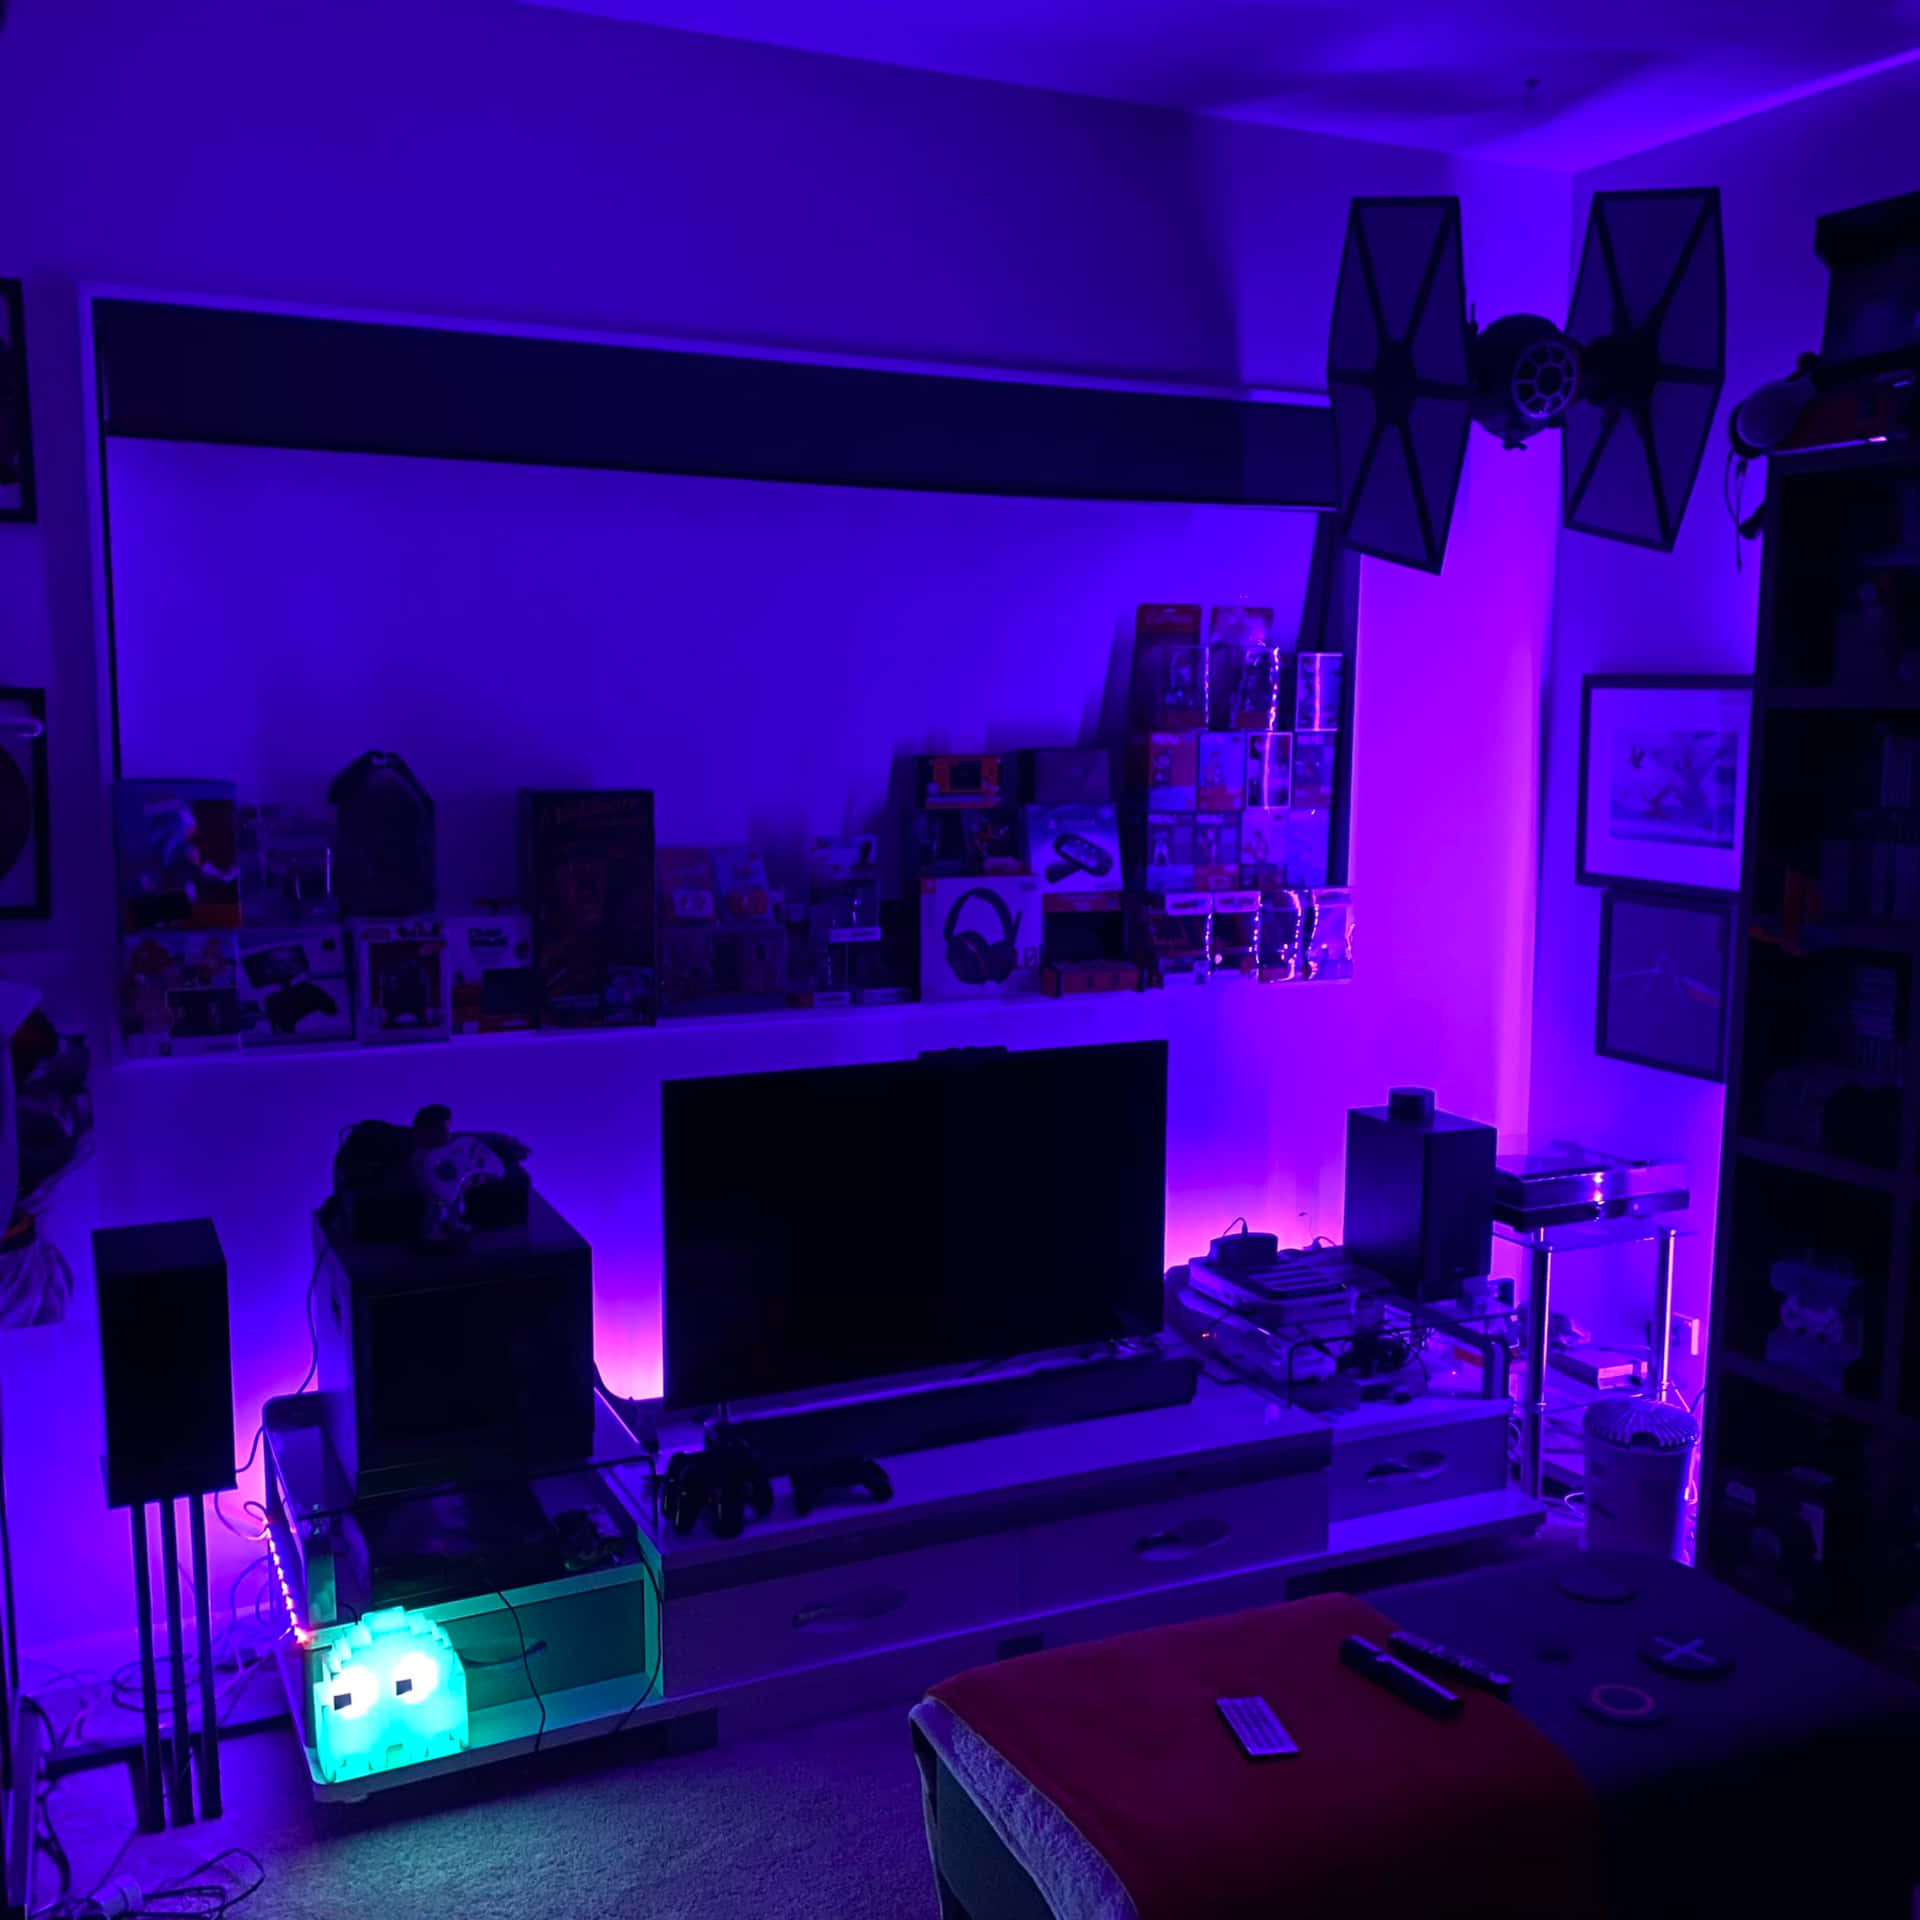 Thrilling Gaming Setup In Neon Glow